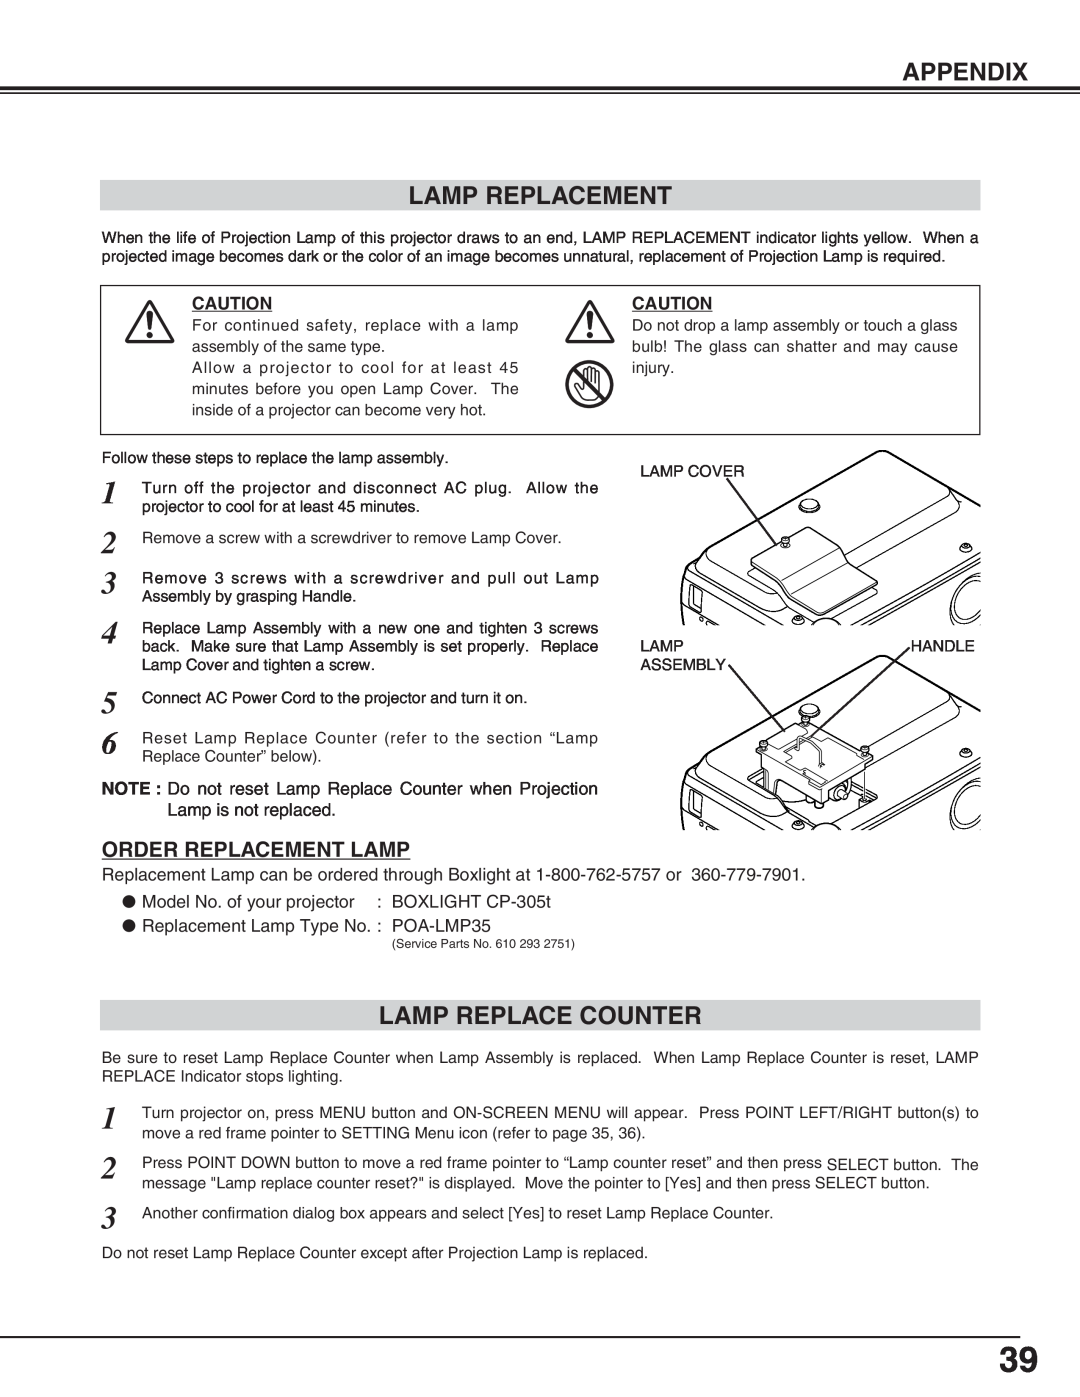 BOXLIGHT cp-305t manual Appendix Lamp Replacement, Lamp Replace Counter, Order Replacement Lamp 